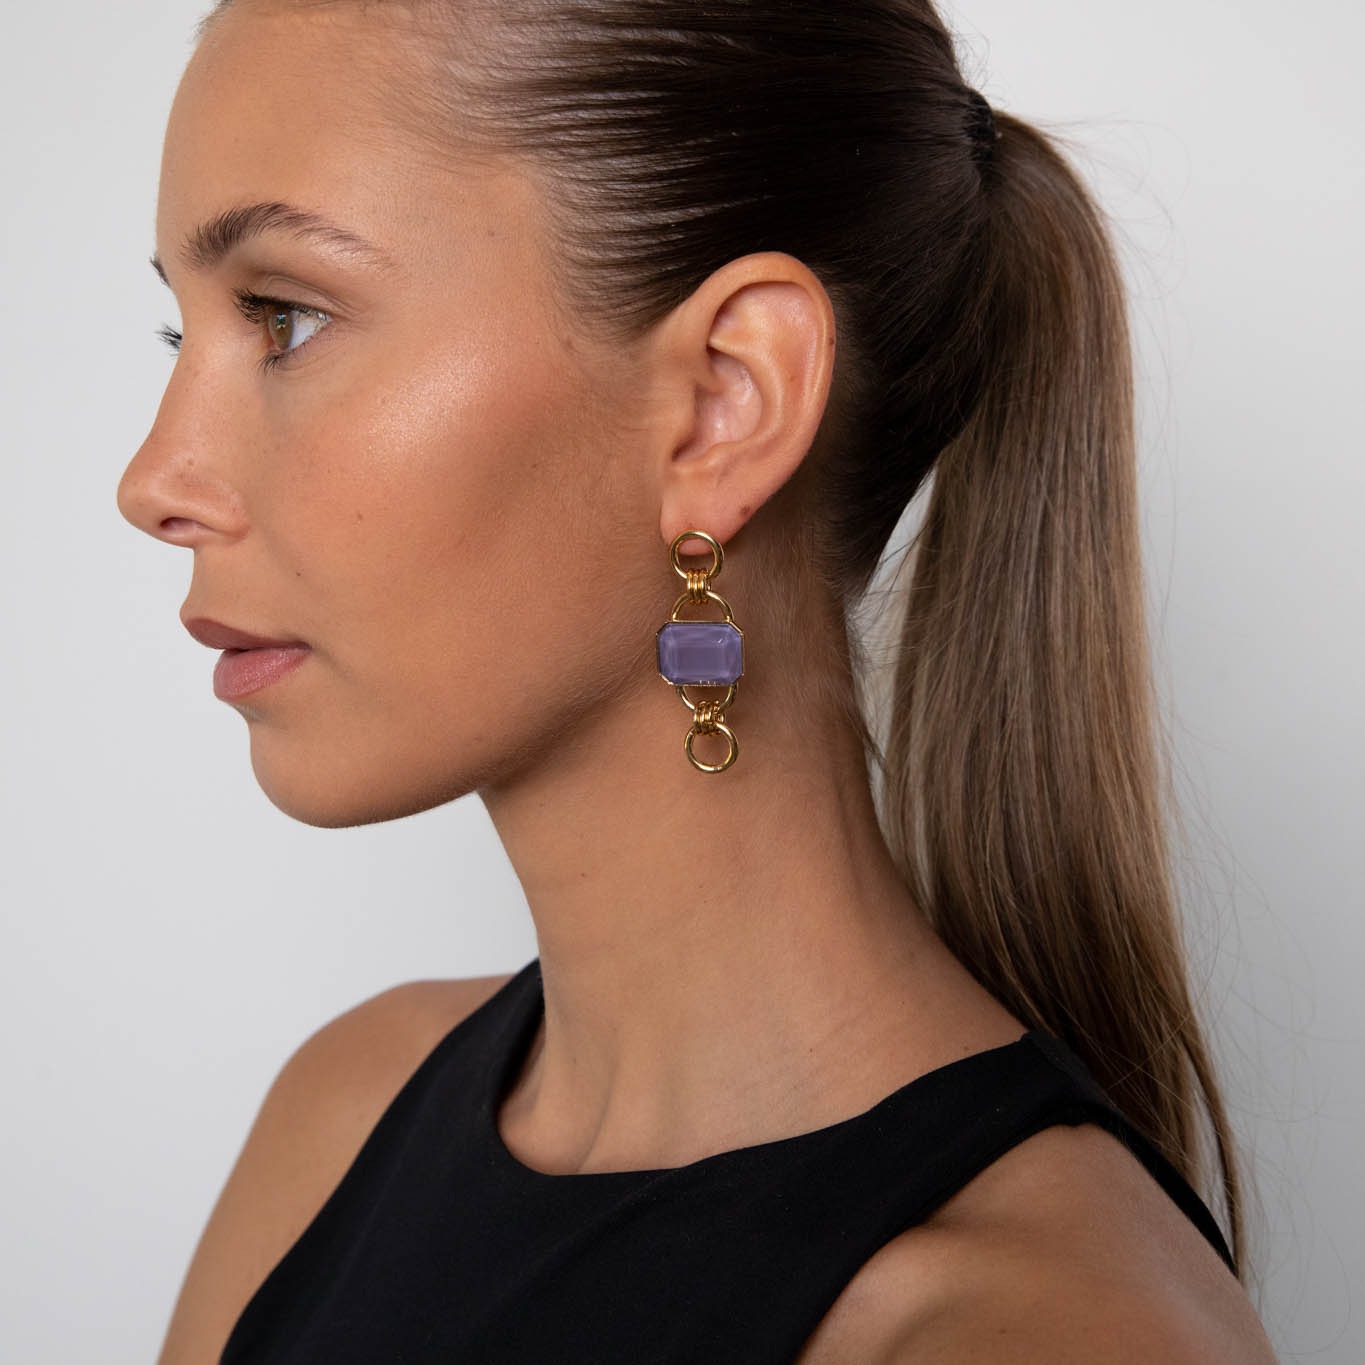 Tiffany lilac short earrings